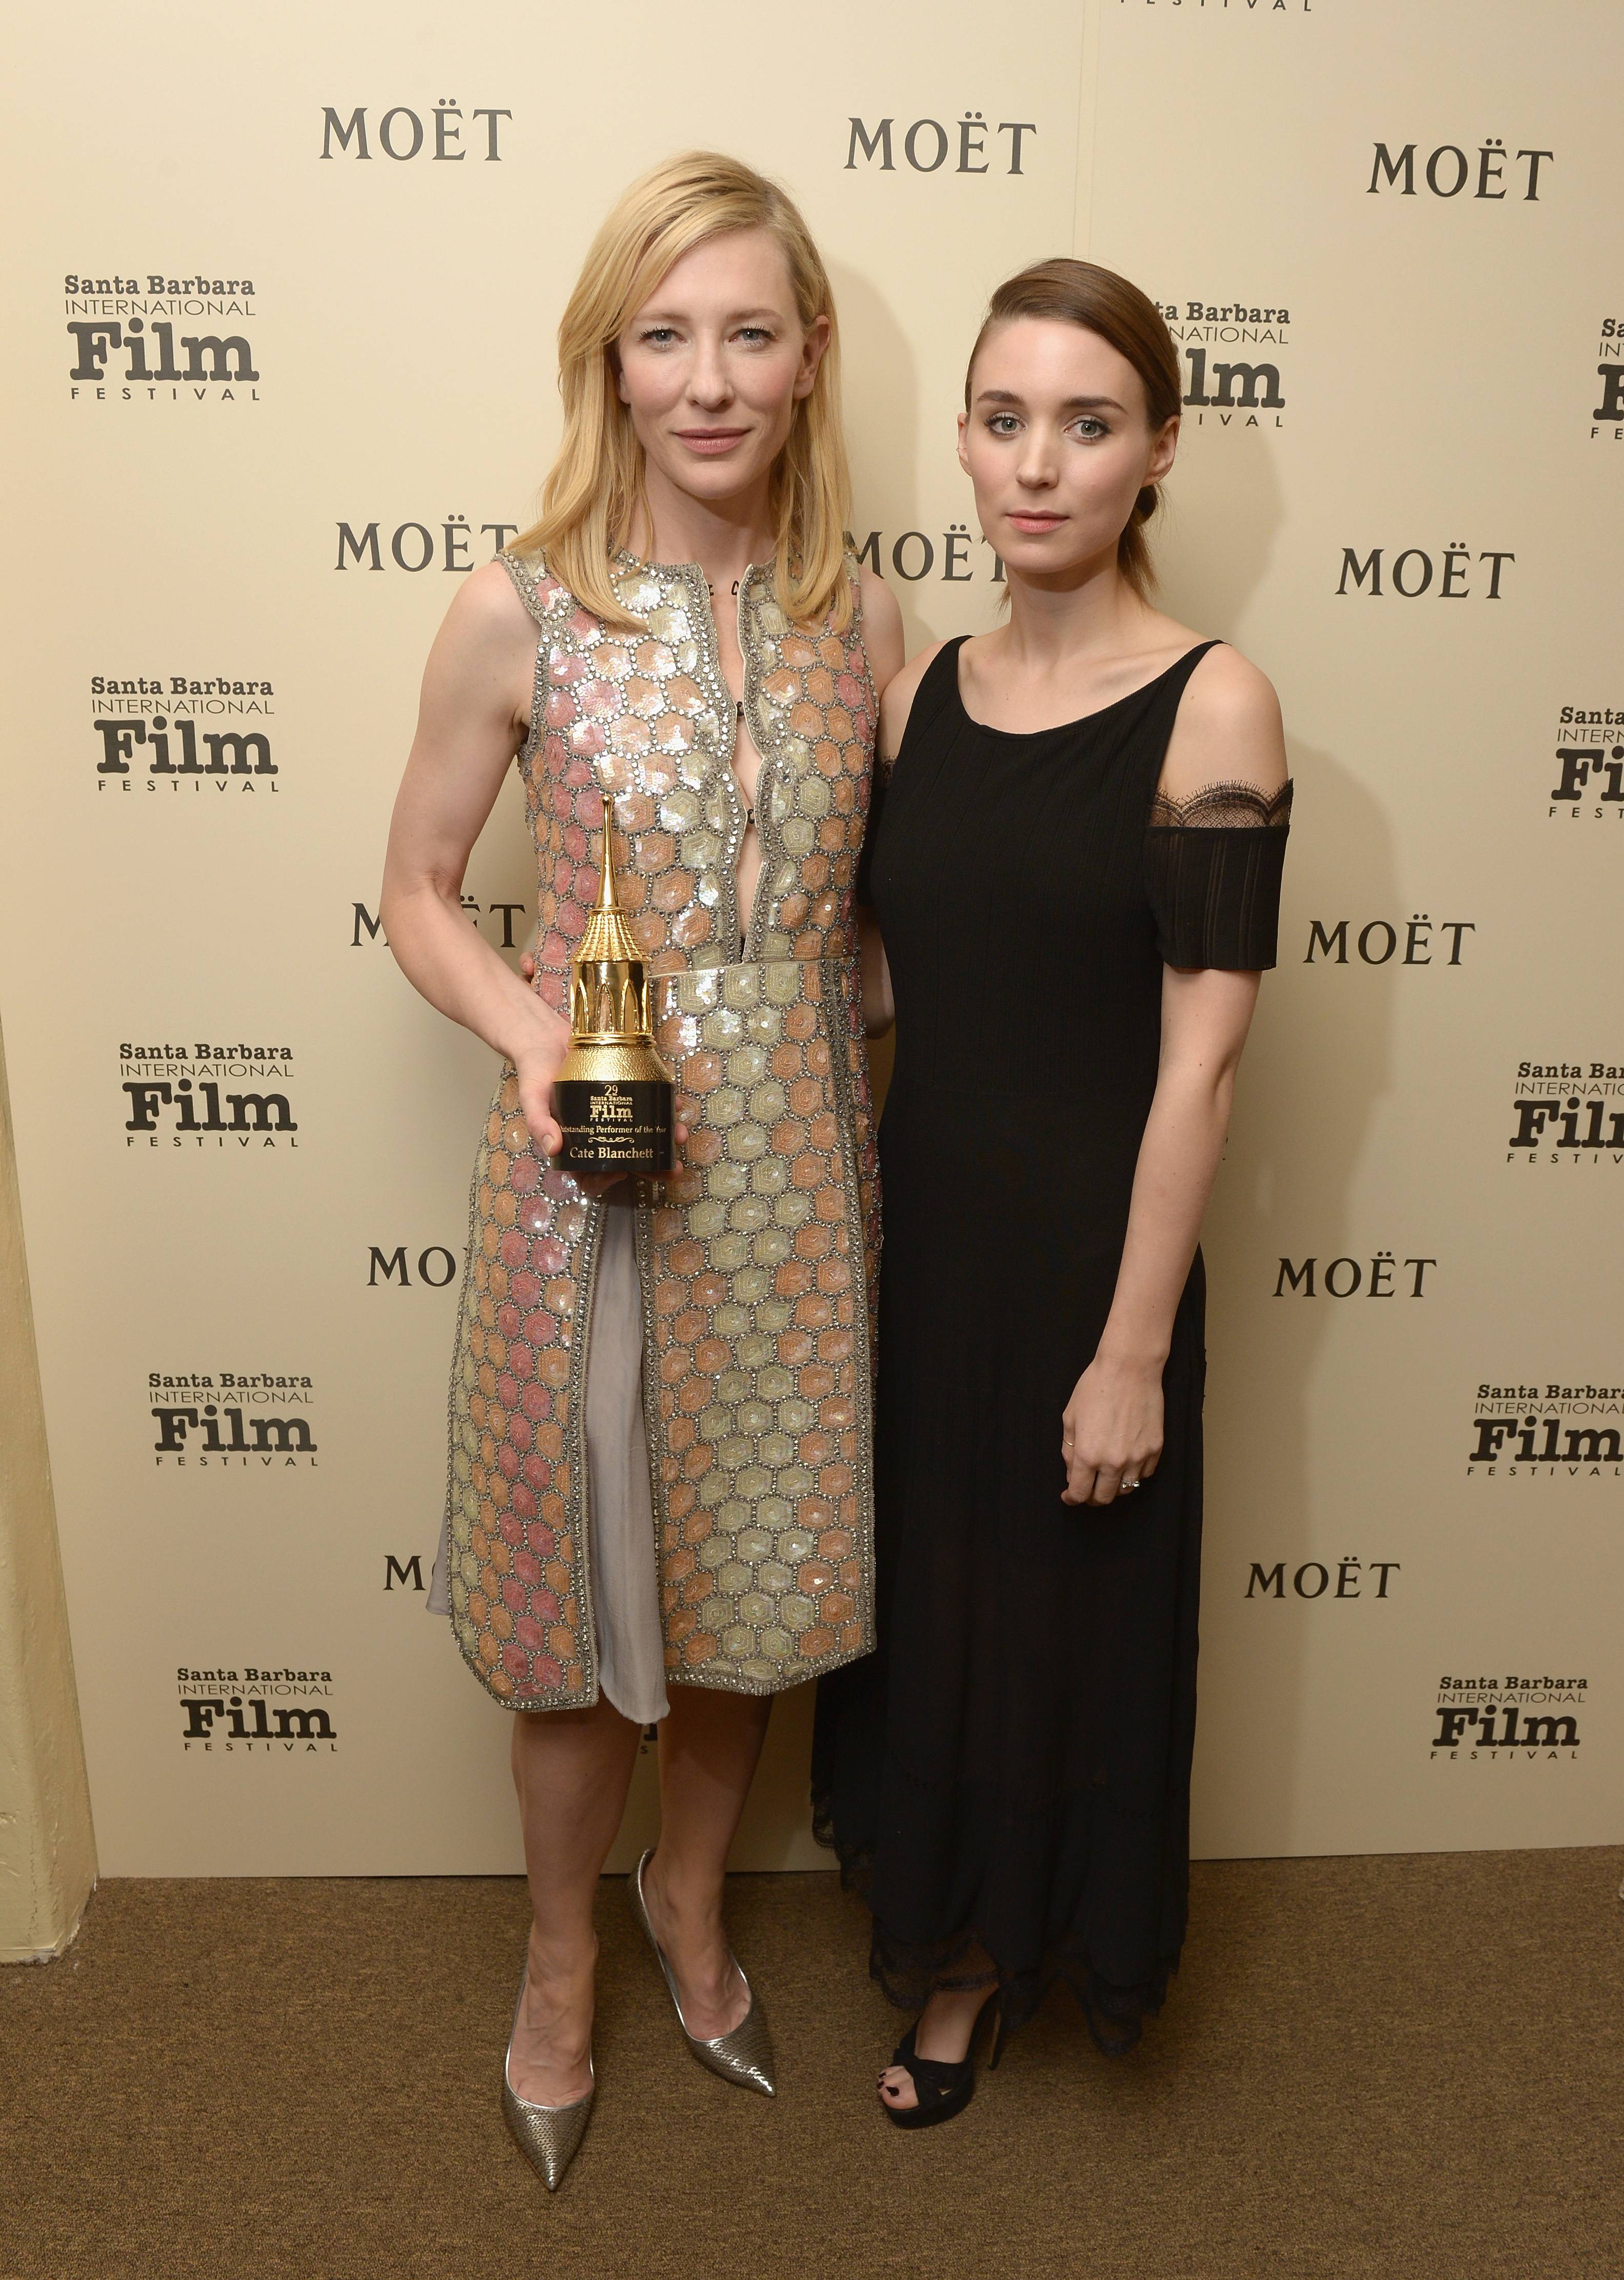 The Moet & Chandon Lounge at The 2014 Santa Barbara International Film Festival -  Honoring Cate Blanchett